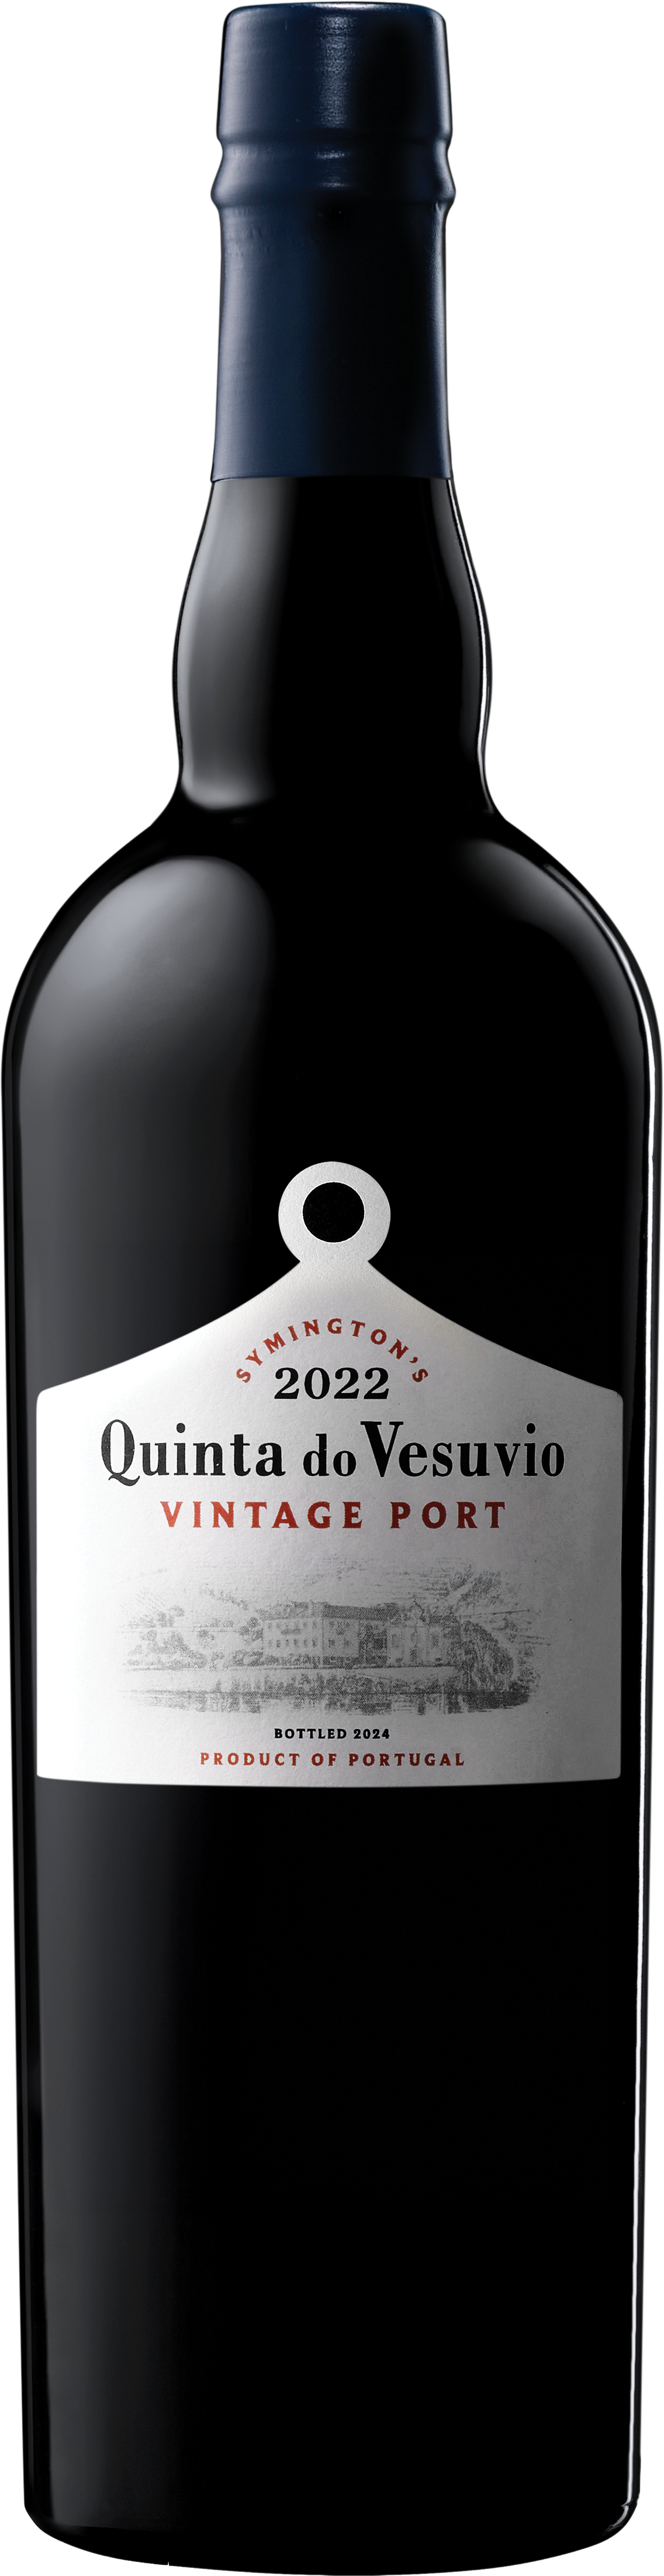 Product Image for QUINTA DO VESUVIO VINTAGE PORT 2022